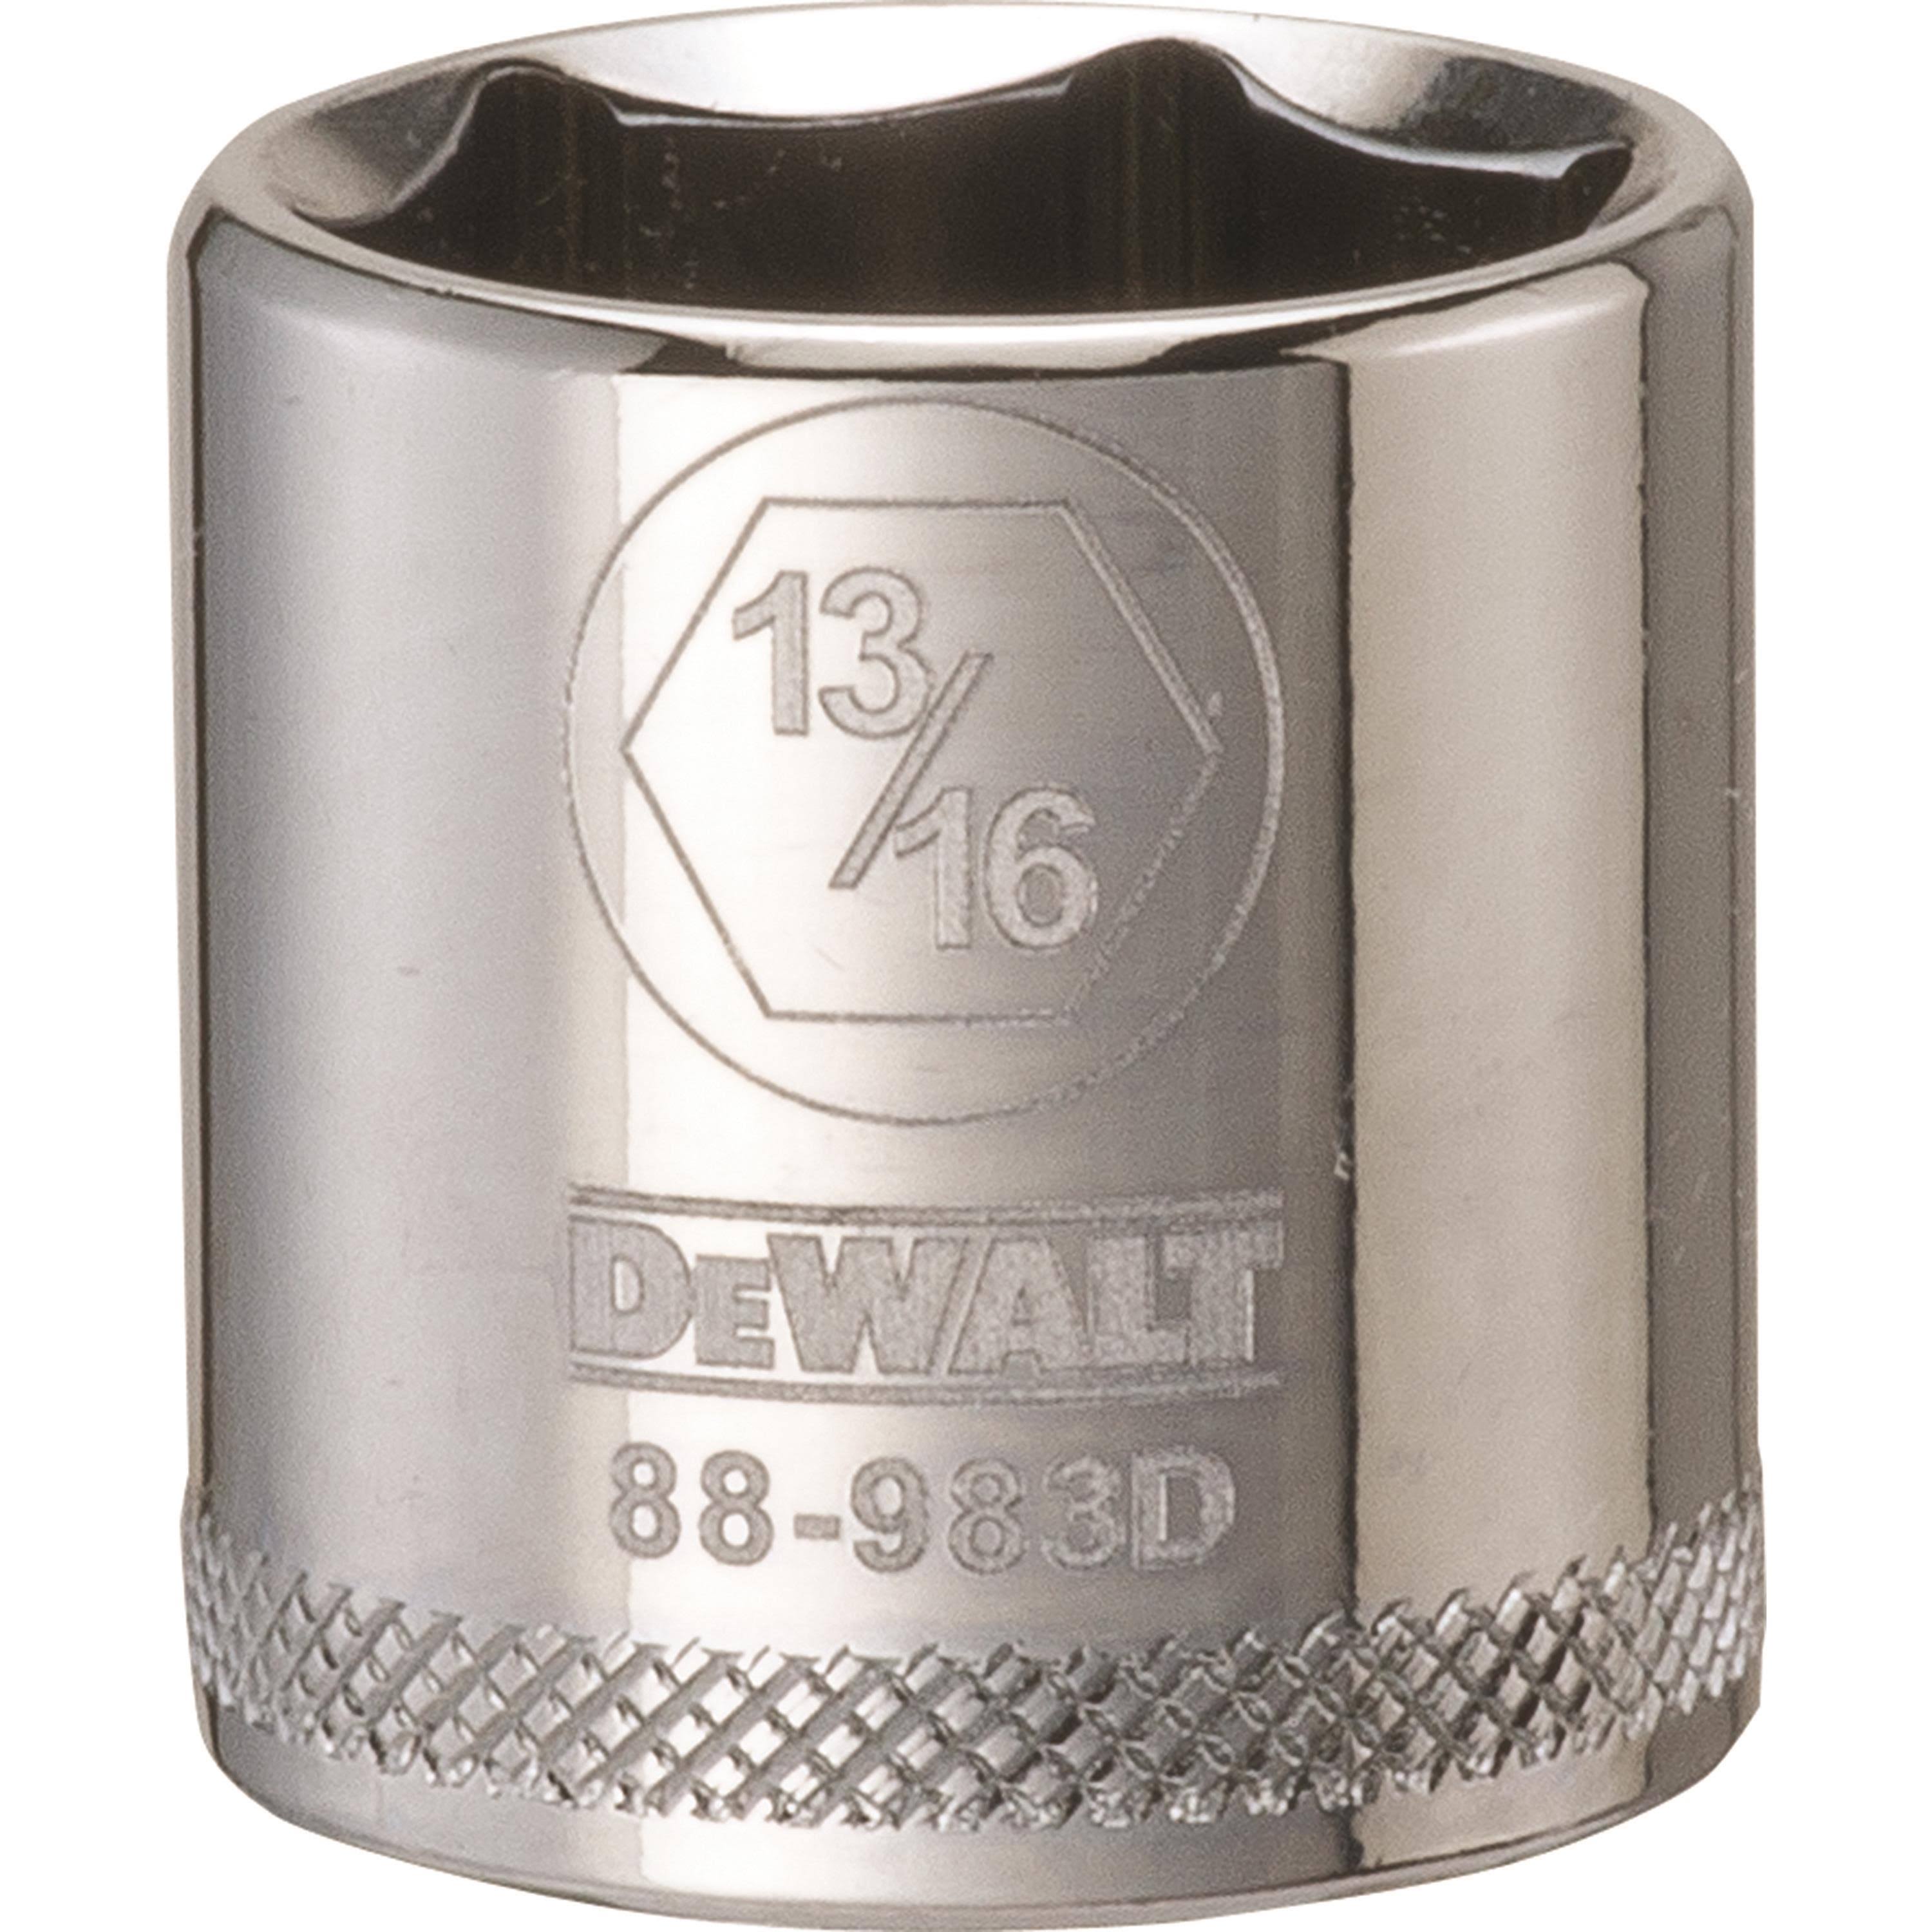 DeWalt DWMT88983OSP 13/16" Deep Socket - 3/8" 6 Point Drive - Steel